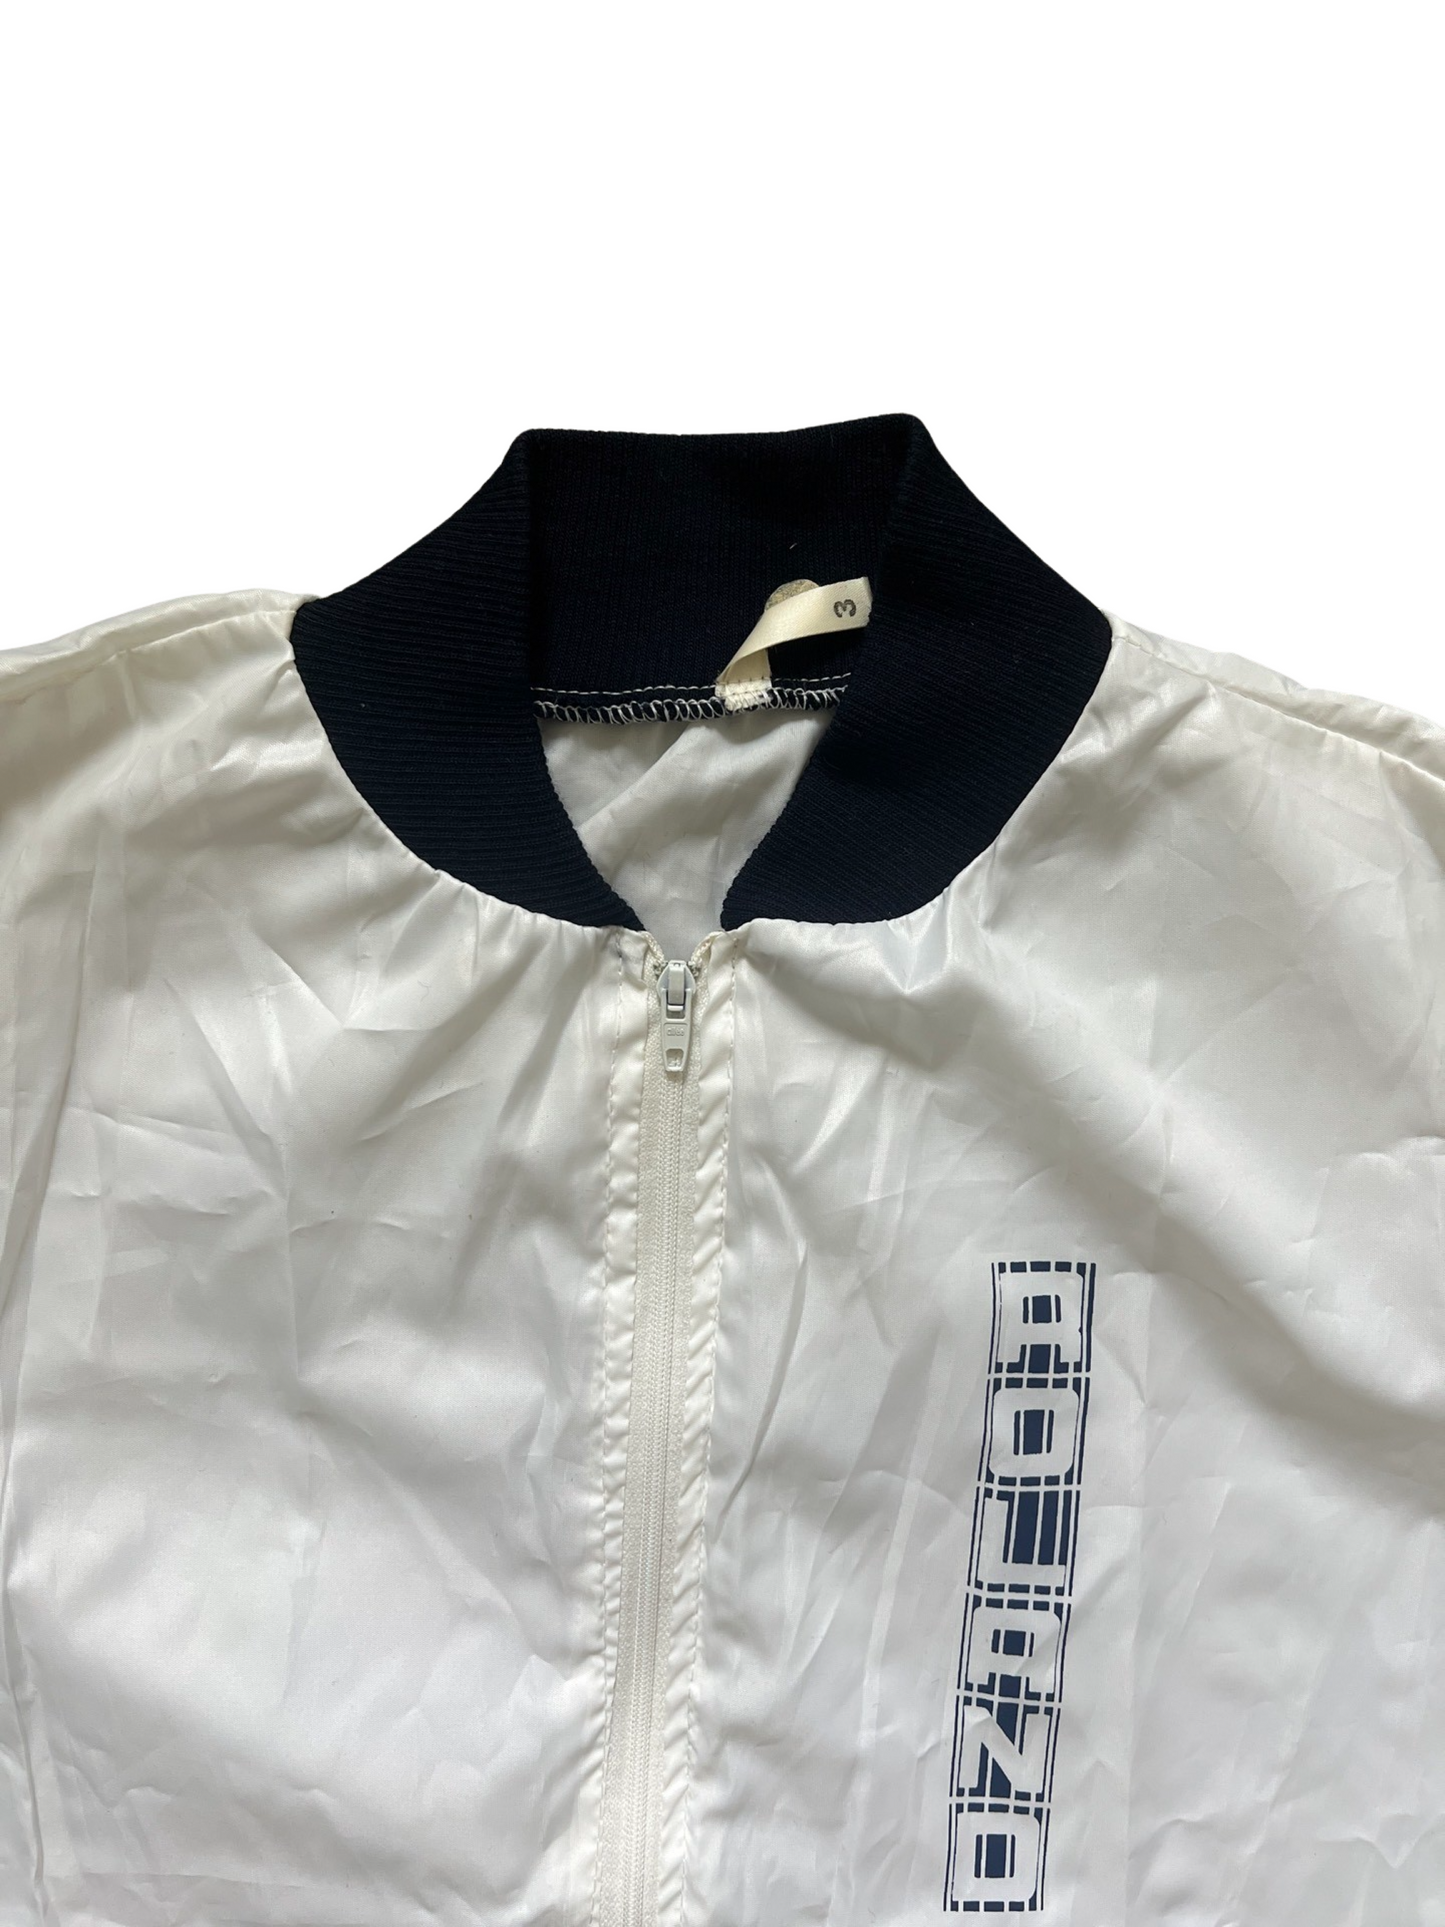 Vintage Roland Garros 1984 Warm Up Jacket (Rare)